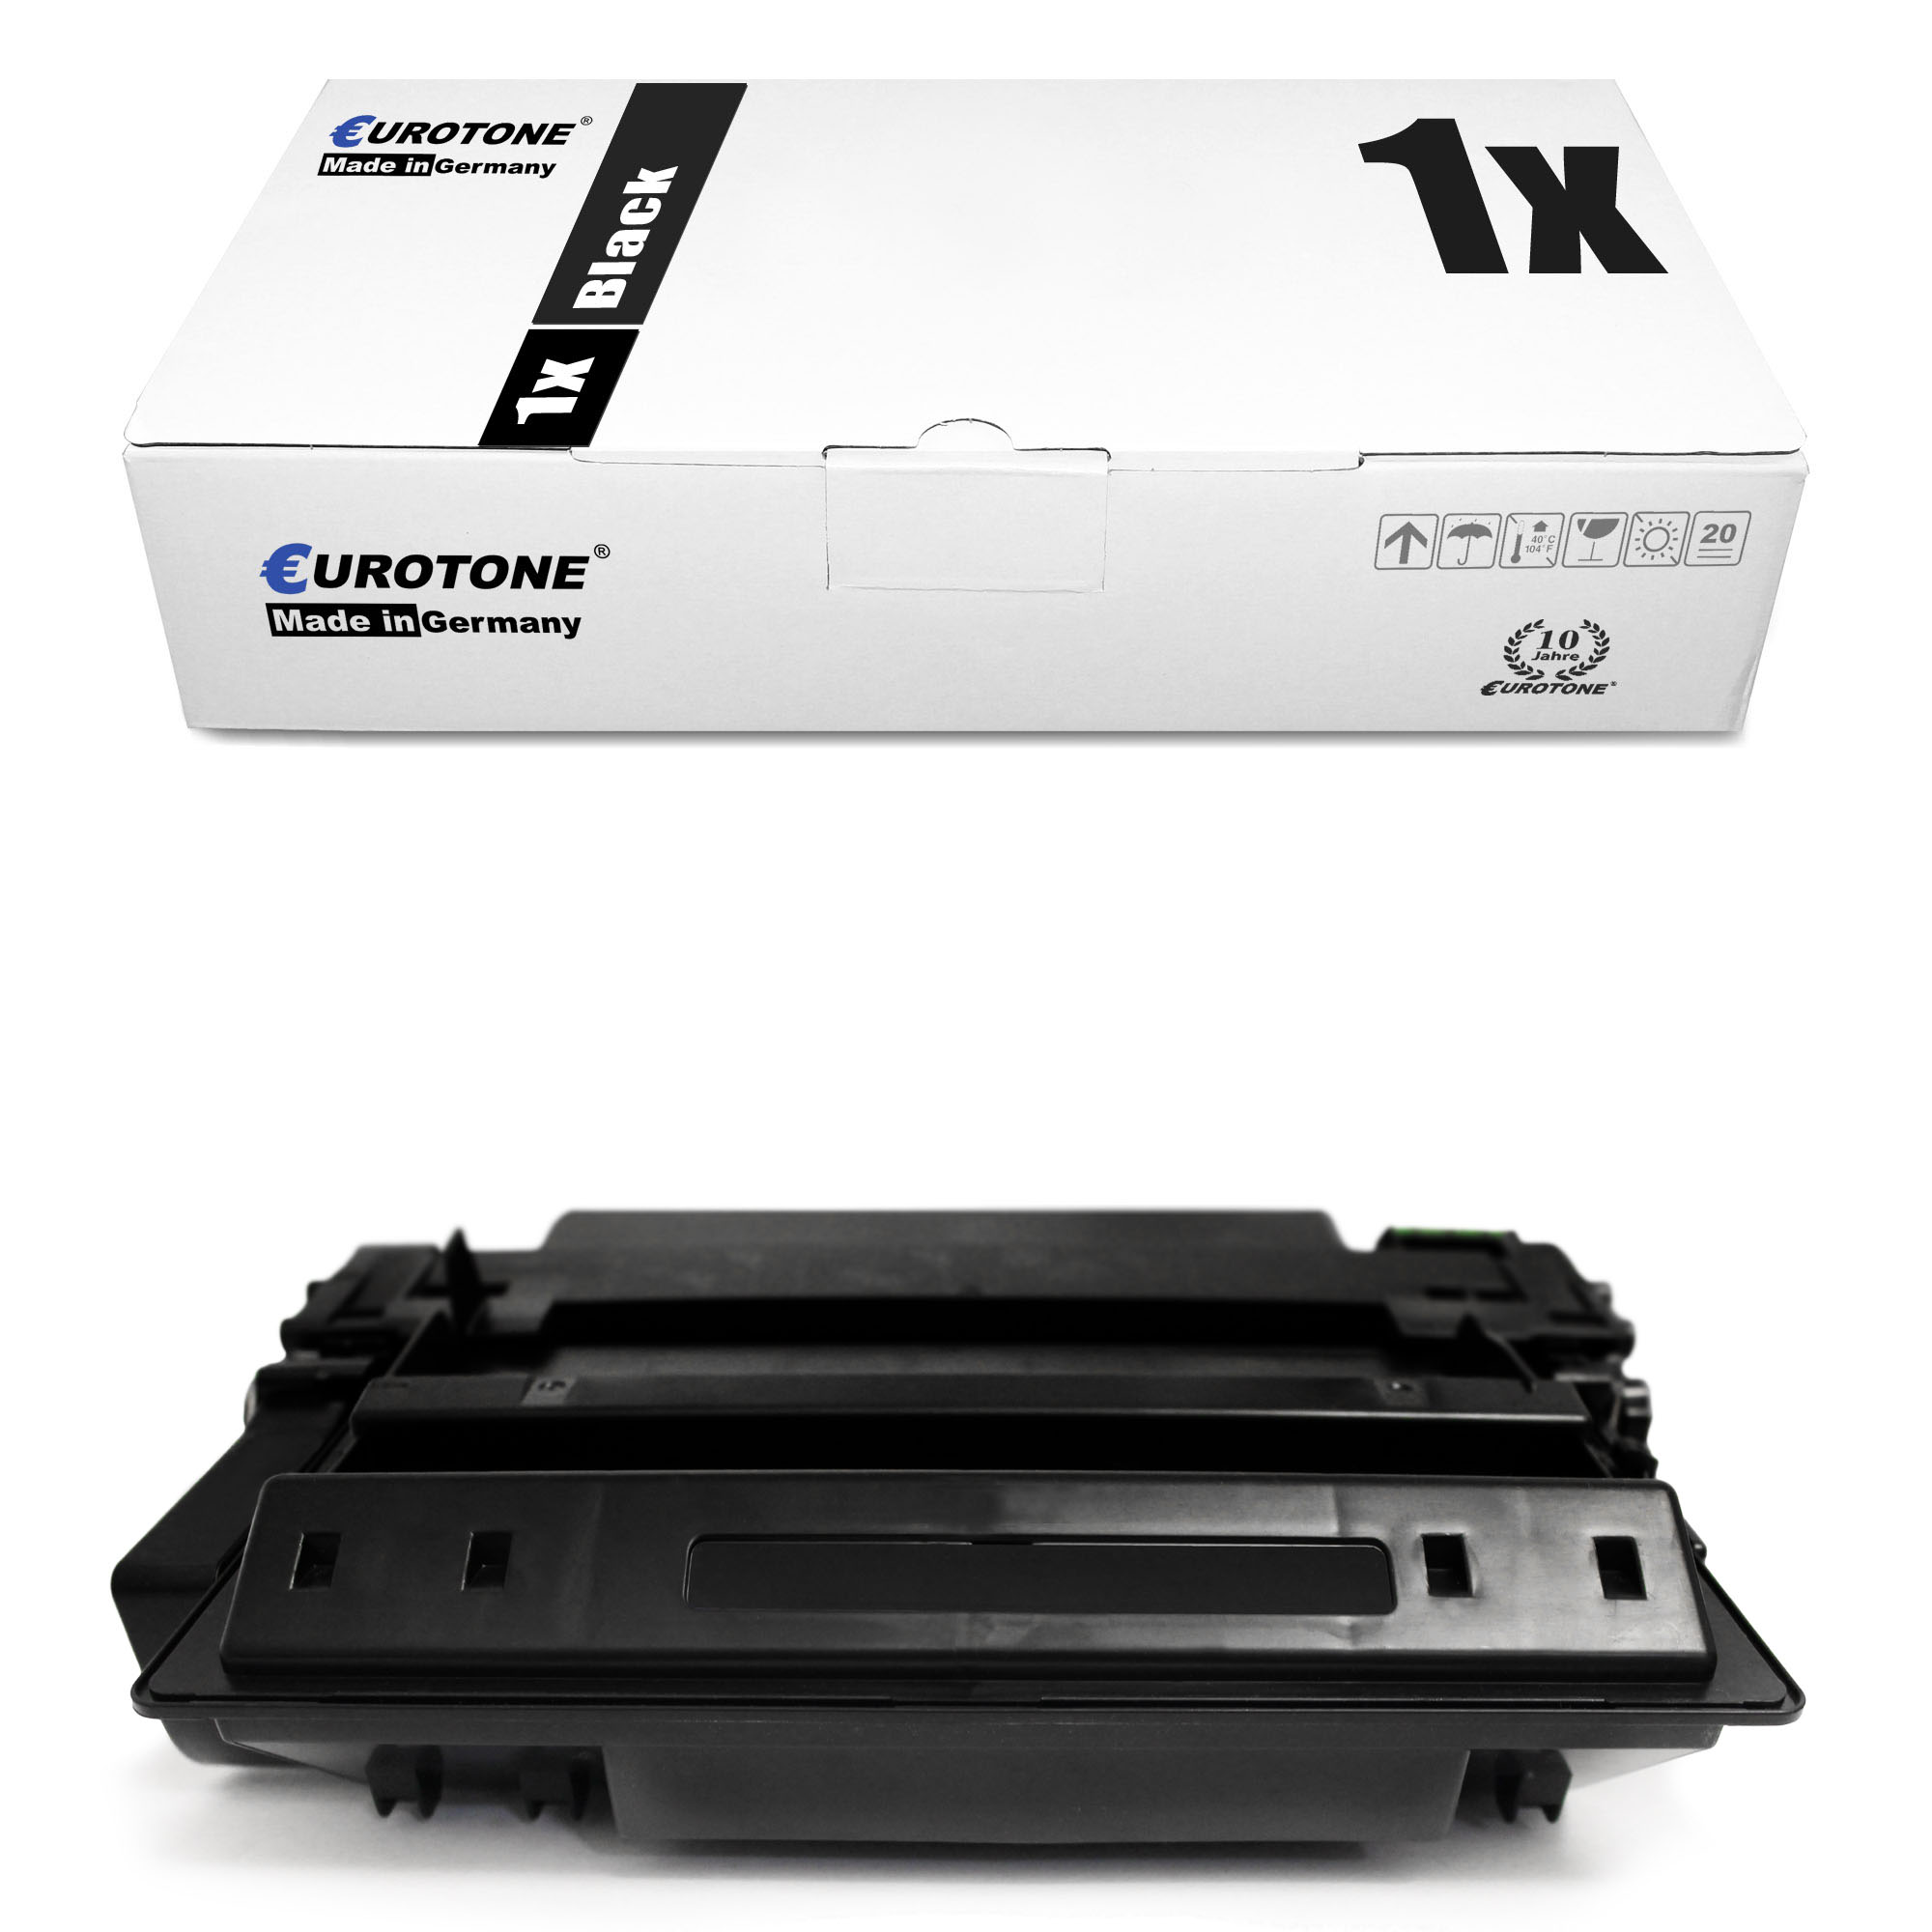 / 70A) HP 70A Q7570A ersetzt Schwarz Toner / (Q7570A EUROTONE Cartridge